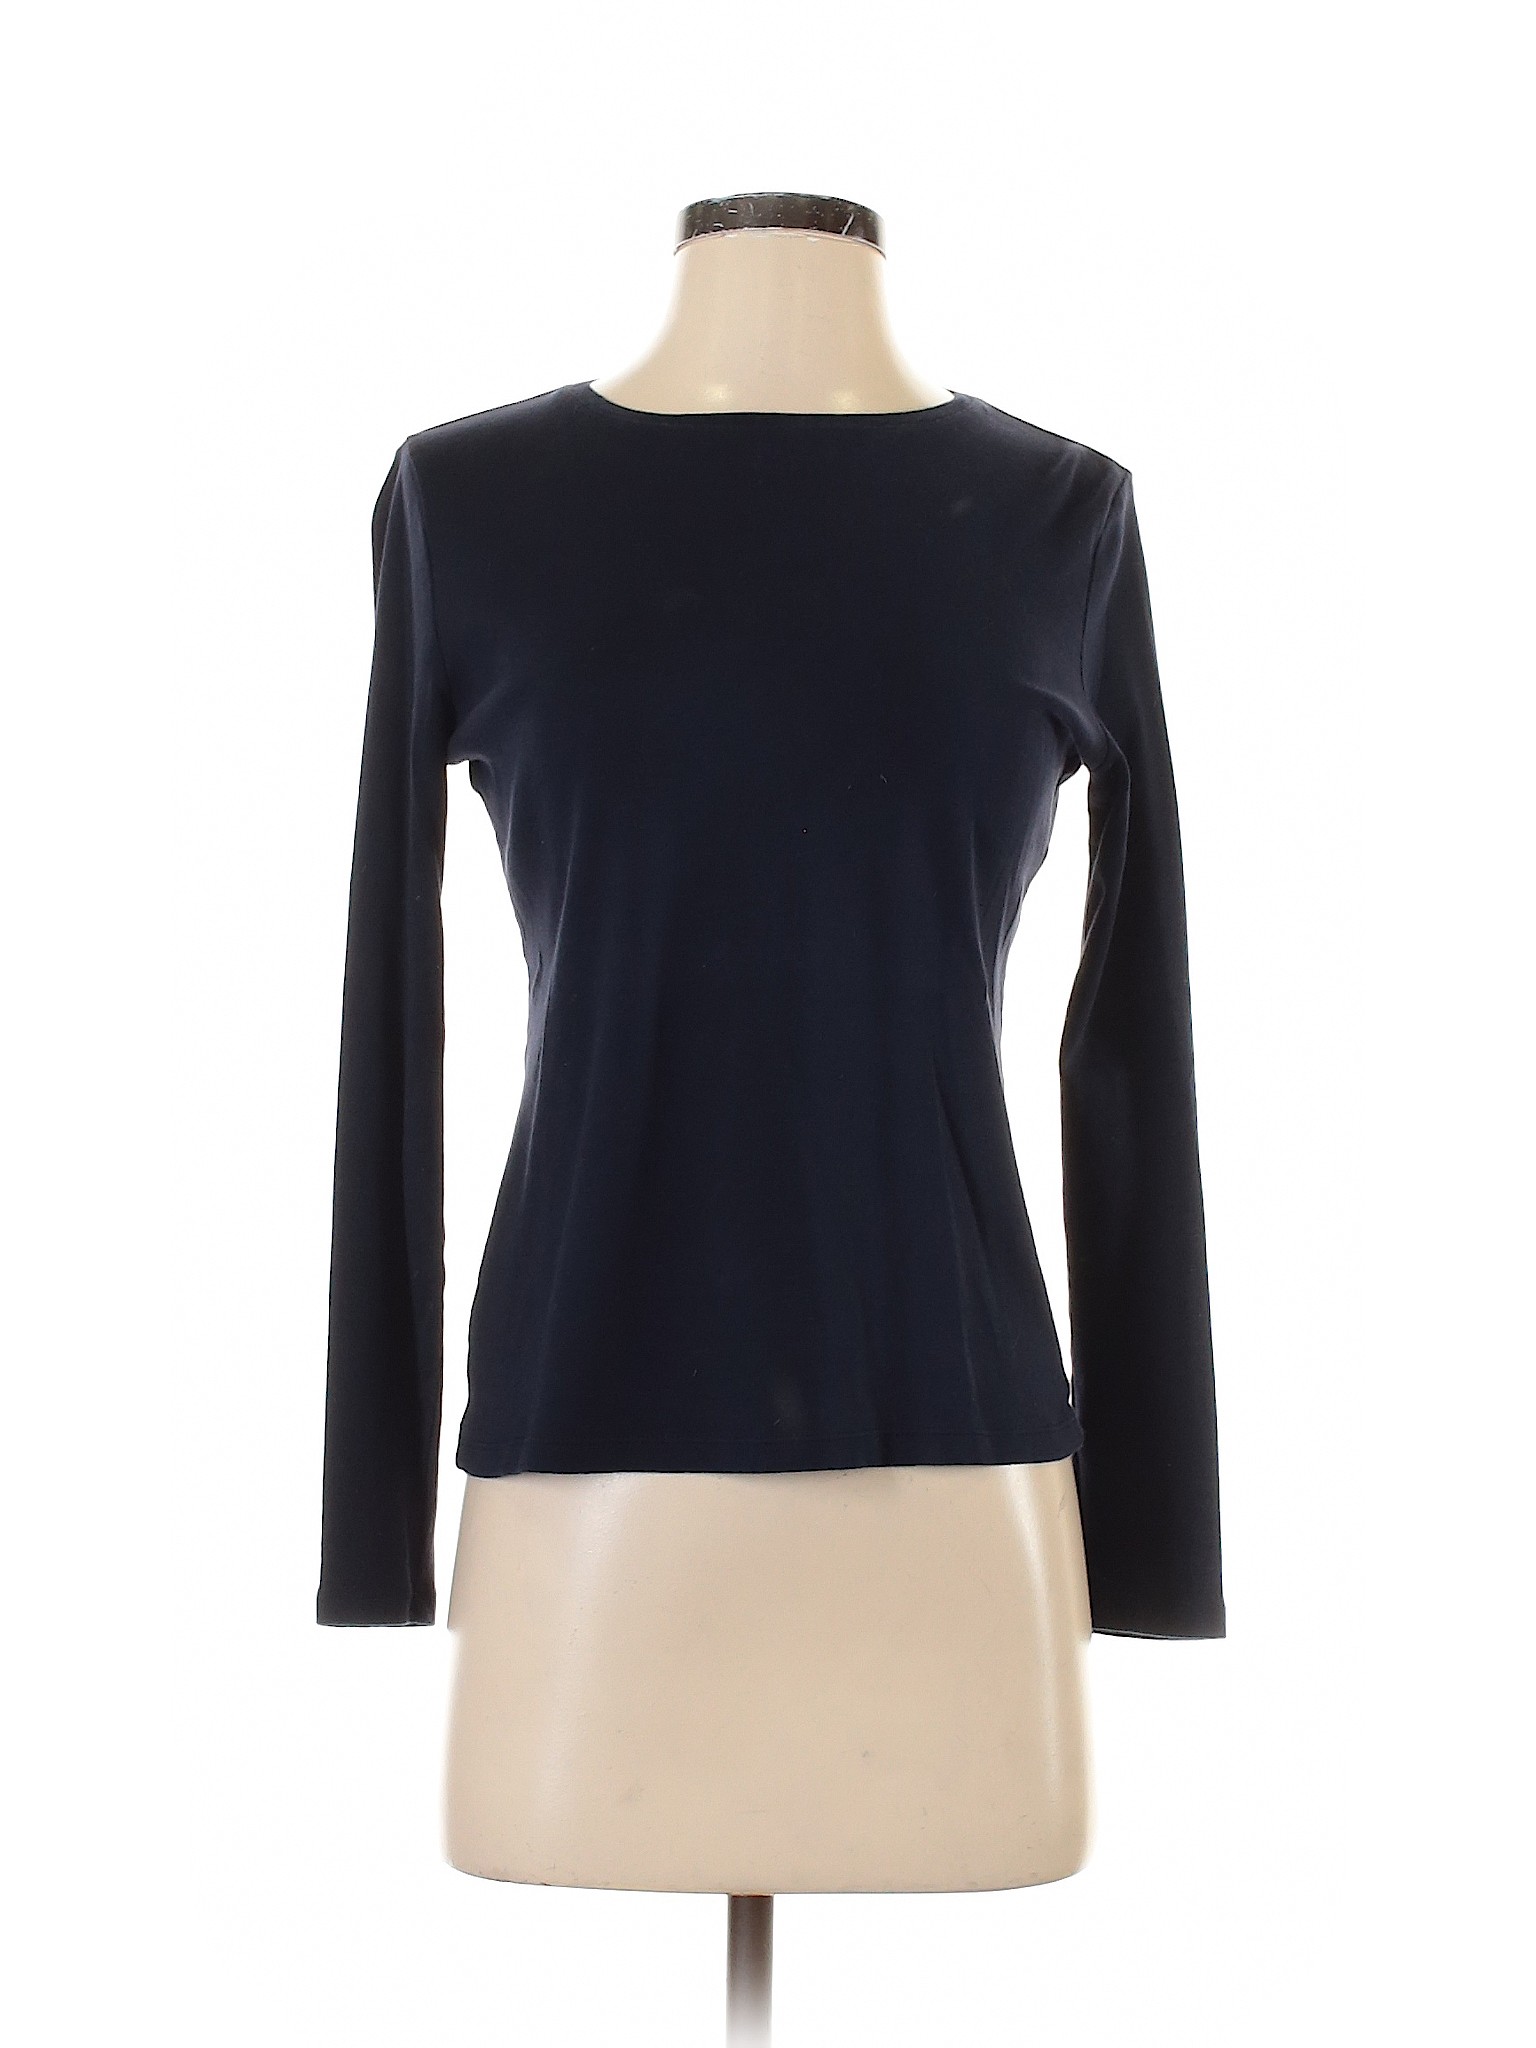 Talbots Women Black Long Sleeve T-Shirt S Petites | eBay